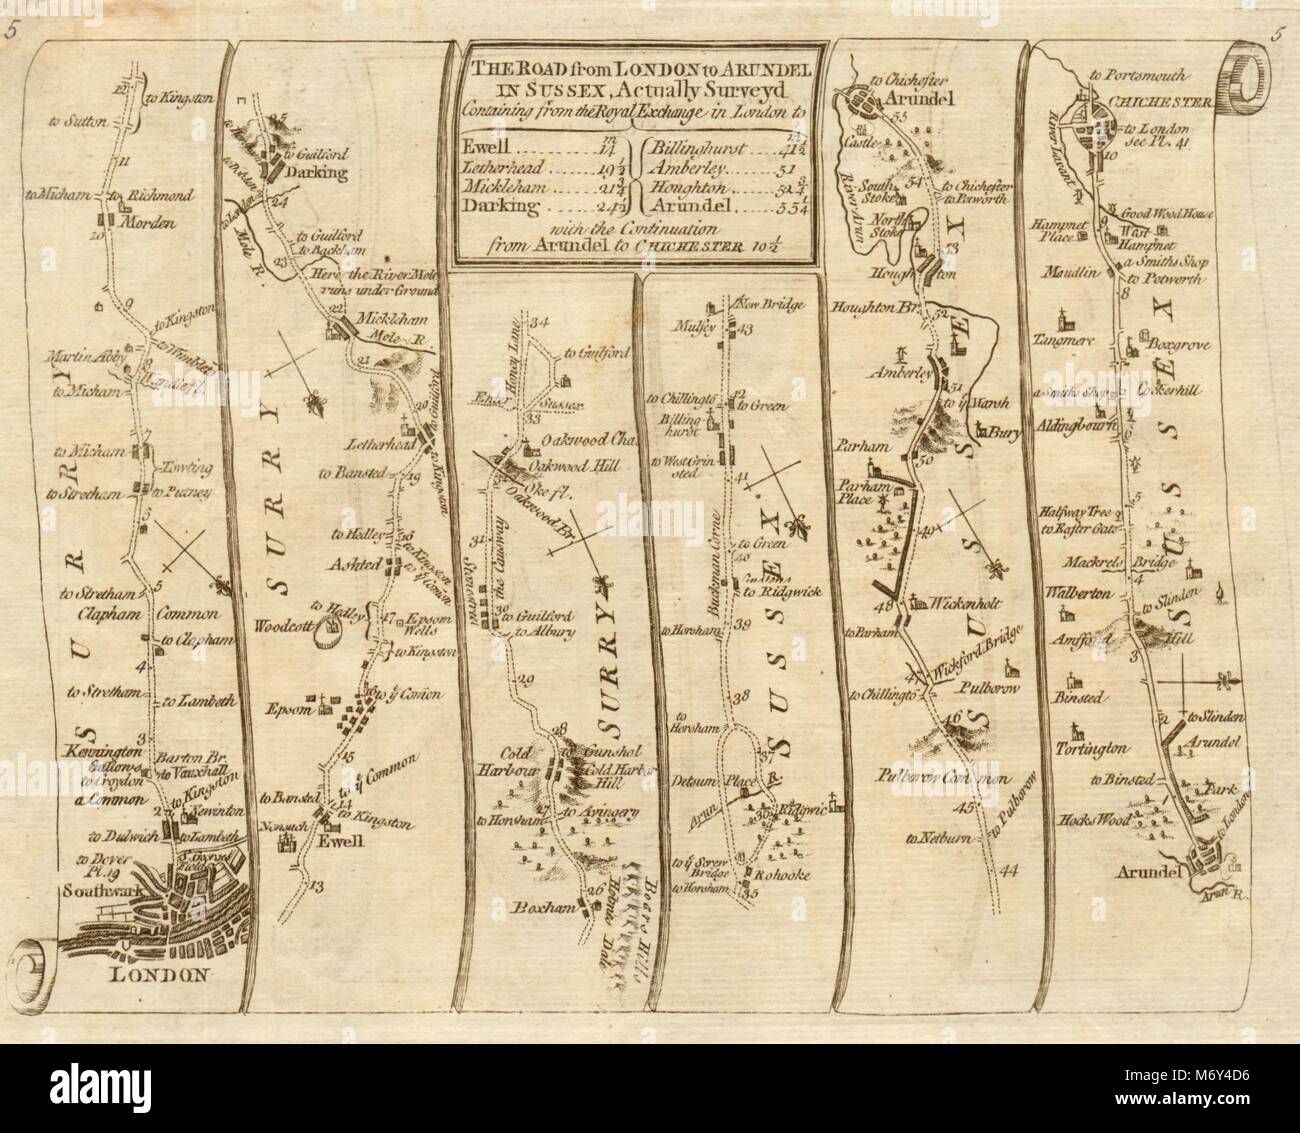 London Clapham Epsom Leatherhead Arundel Chichester. KITCHIN road map 1767 Stock Photo